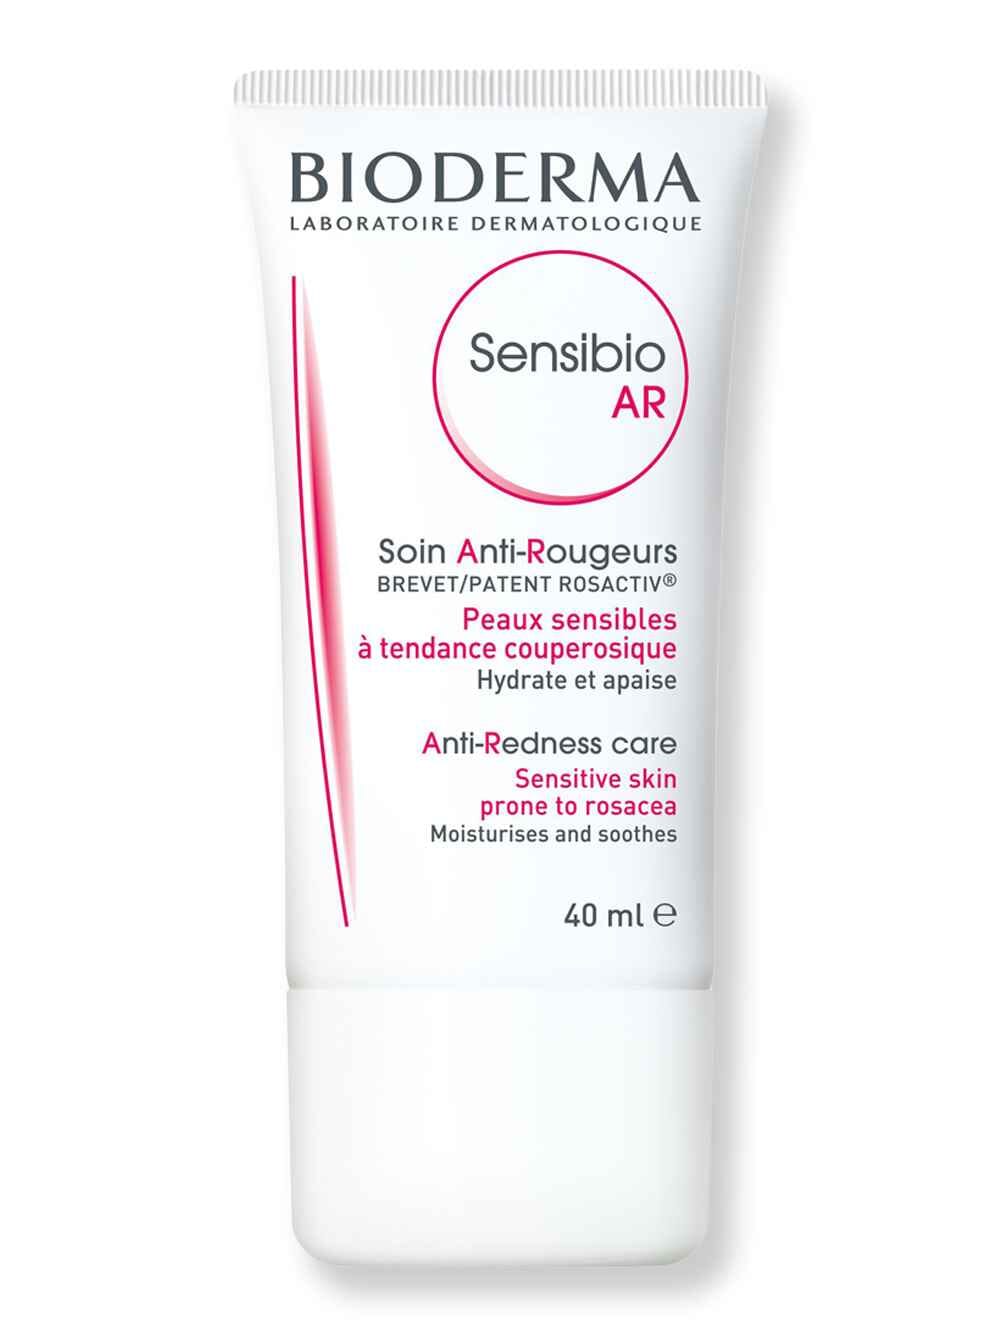 Bioderma Bioderma Sensibio AR Cream 1.35 fl oz40 ml Face Moisturizers 